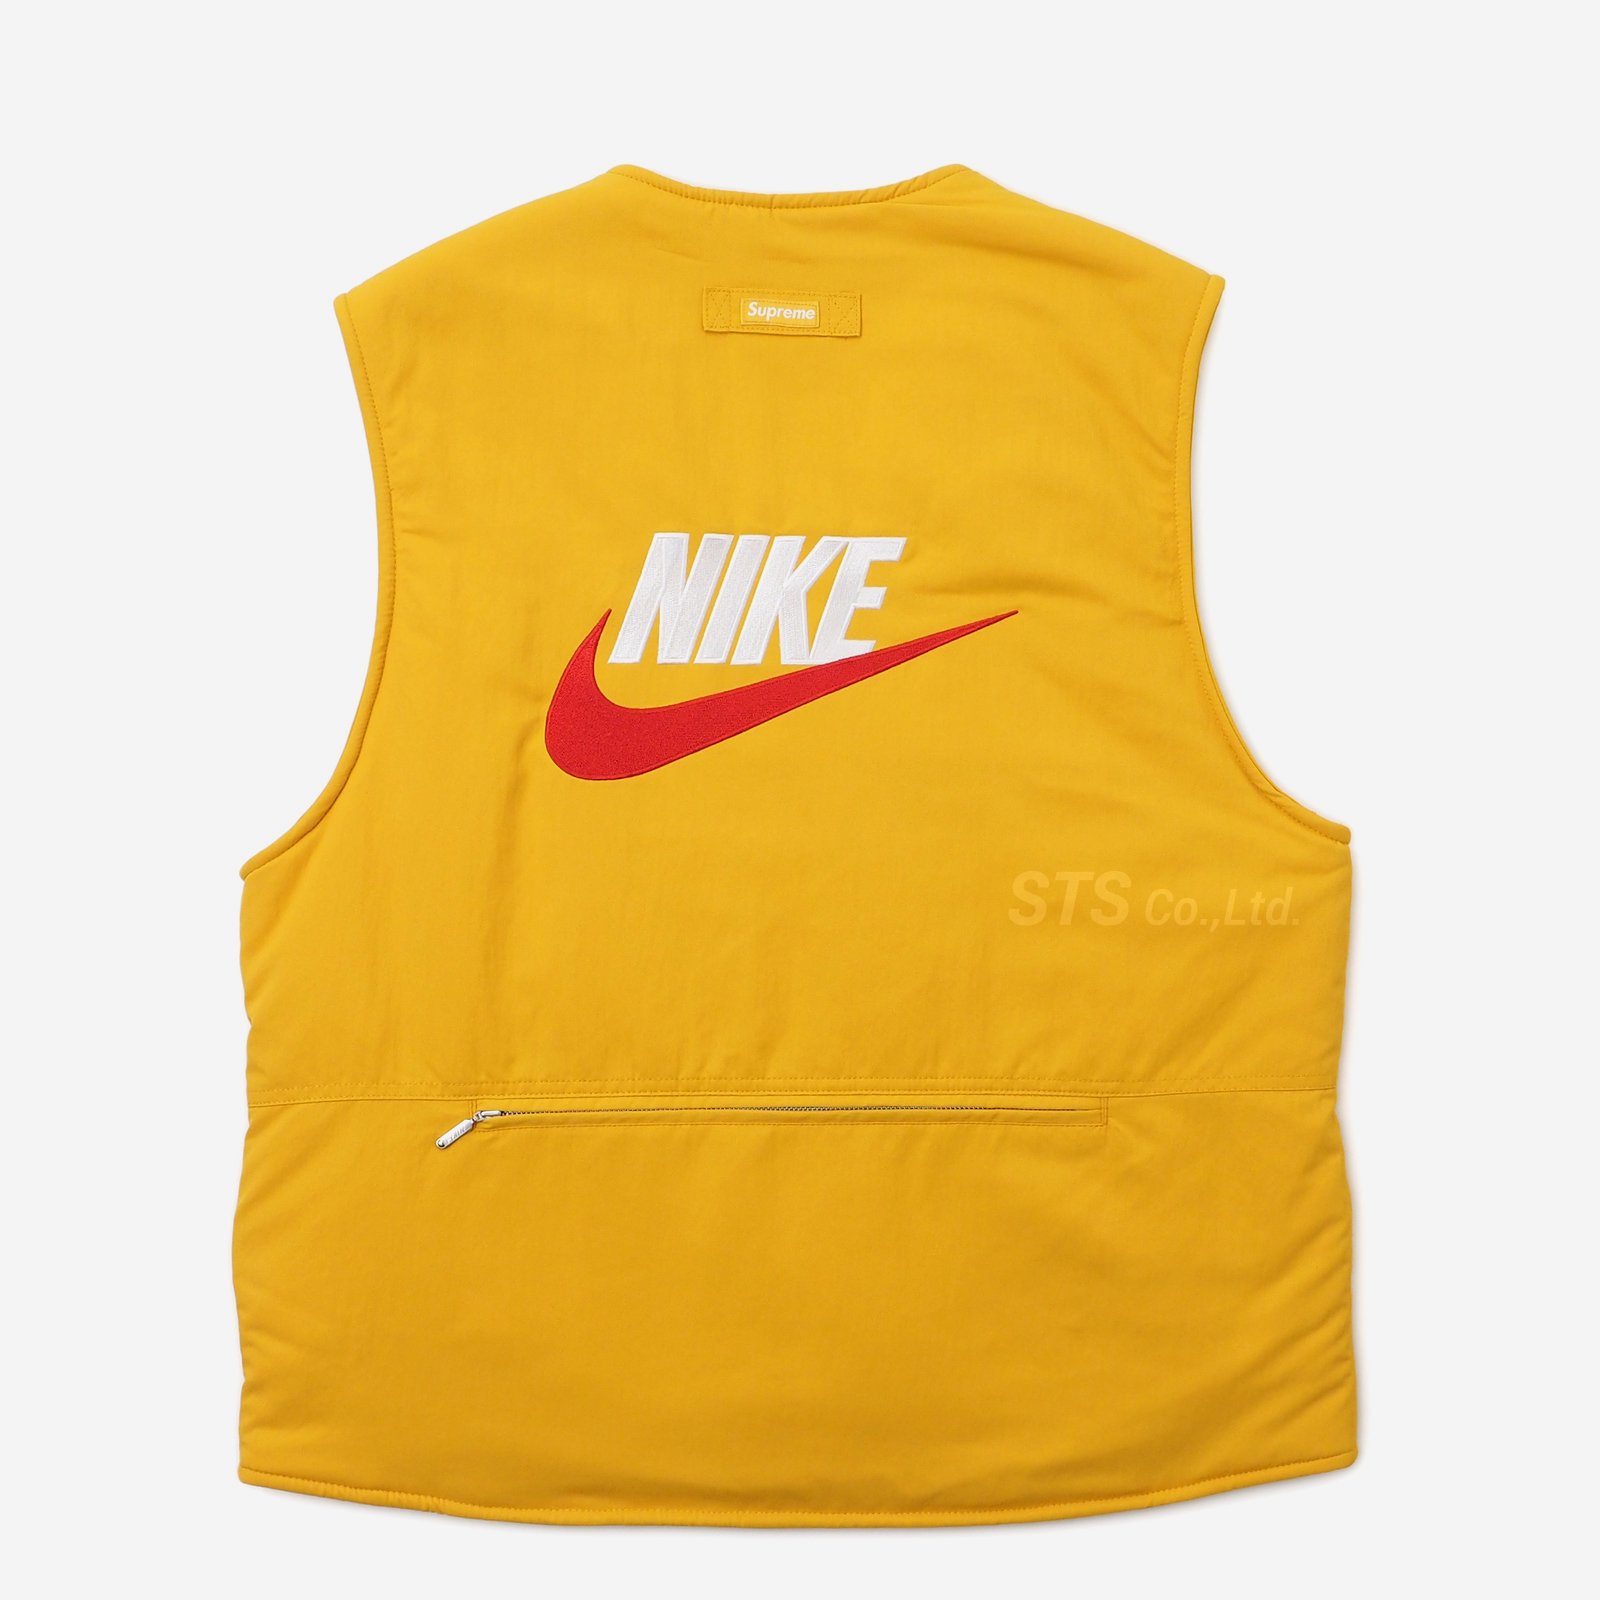 Supreme/Nike Reversible Nylon Sherpa Vest - UG.SHAFT